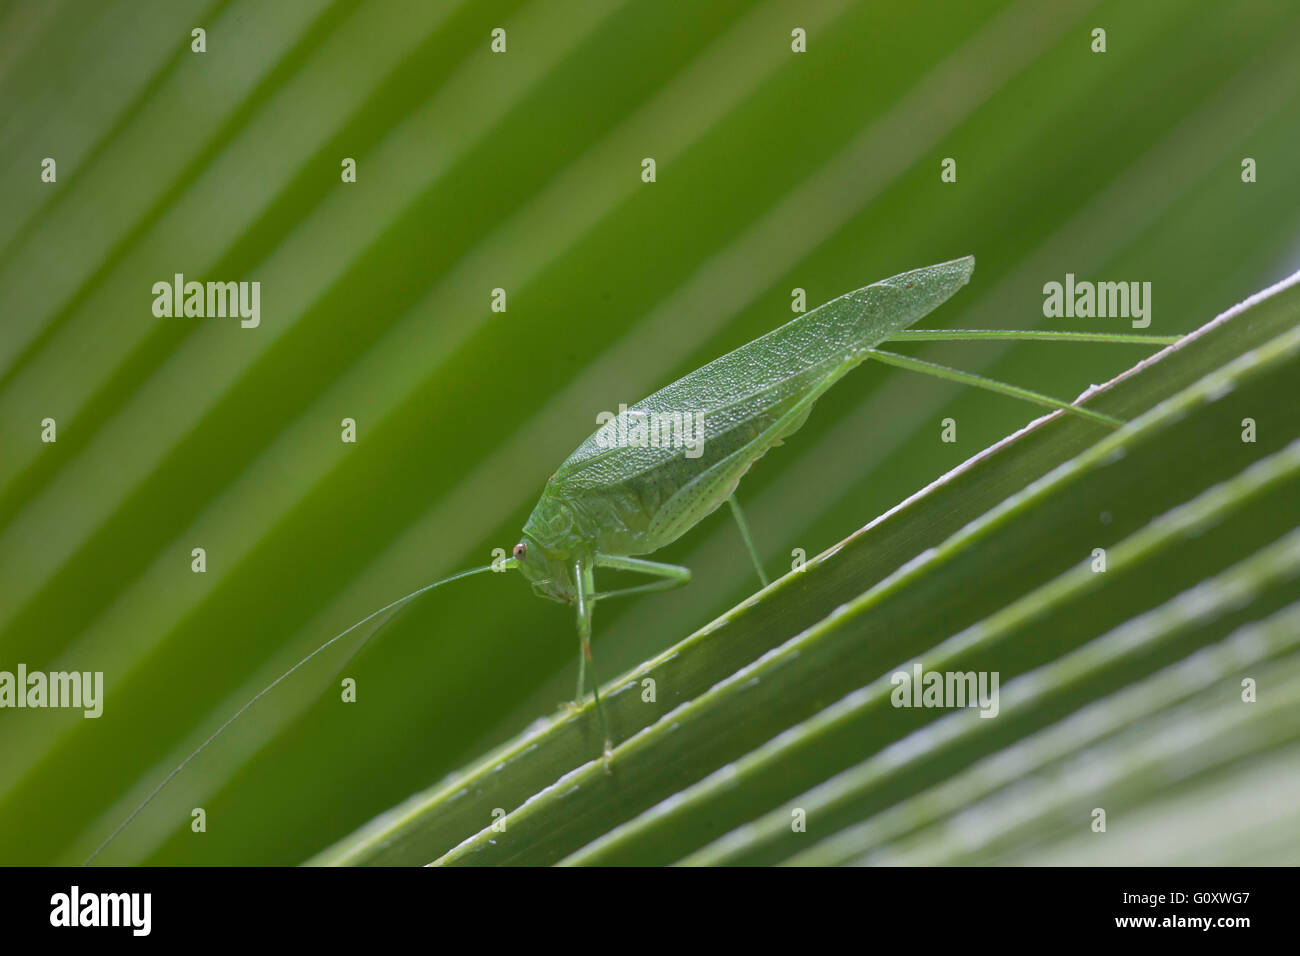 Katydid gigante zampe lunghe foglie verde erba tramoggia Foto Stock